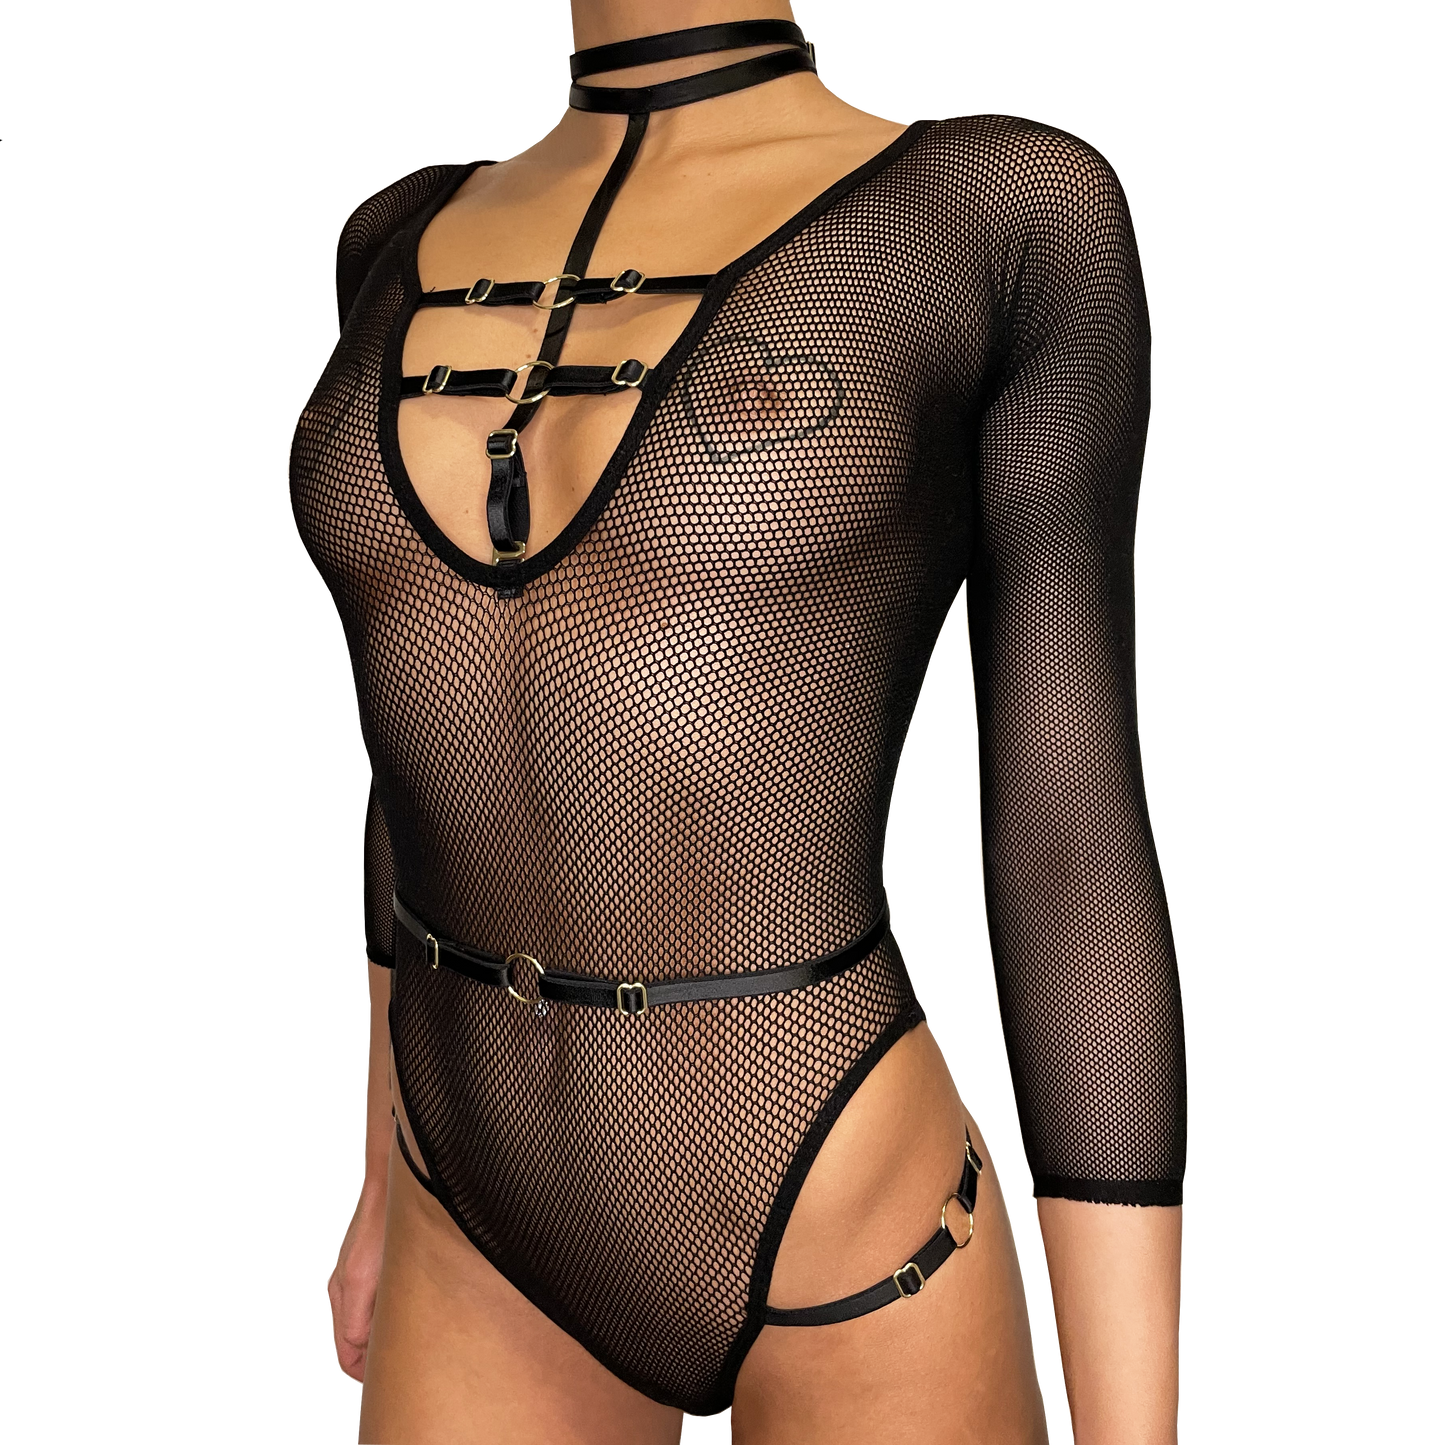 Fishnet bodysuit in black with golden details